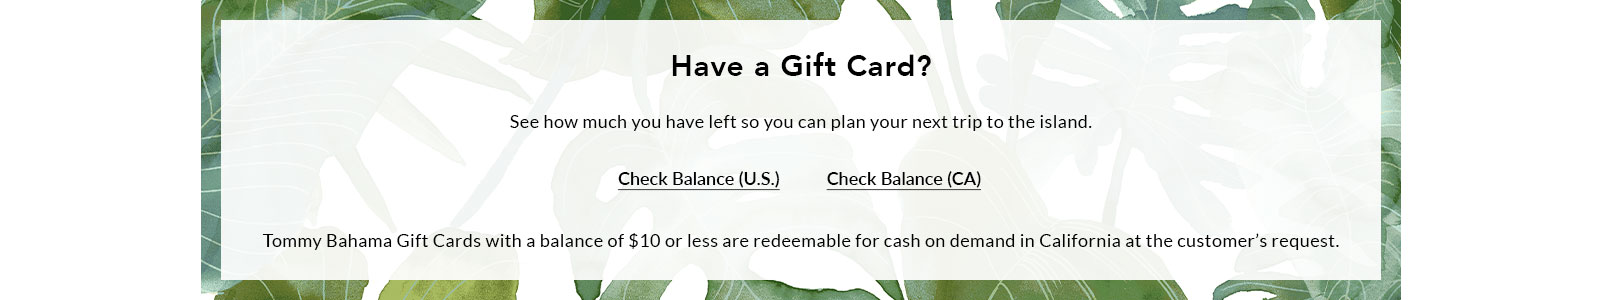 Check your gift card balance